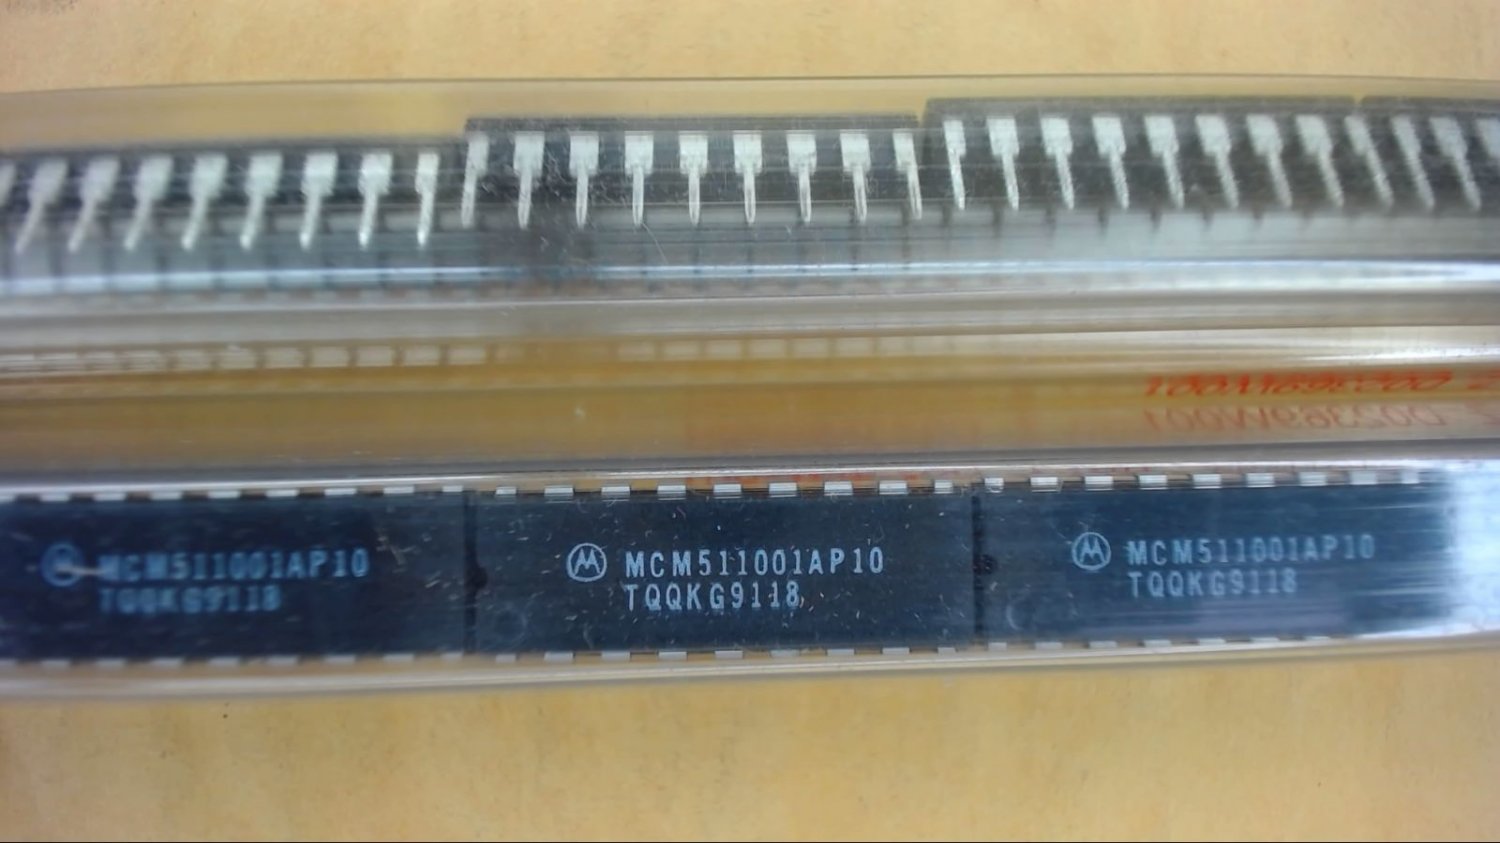 SIGNETICS 7425NA 14-Pin Dip 8419 Rare IC New Lot Quantity-3